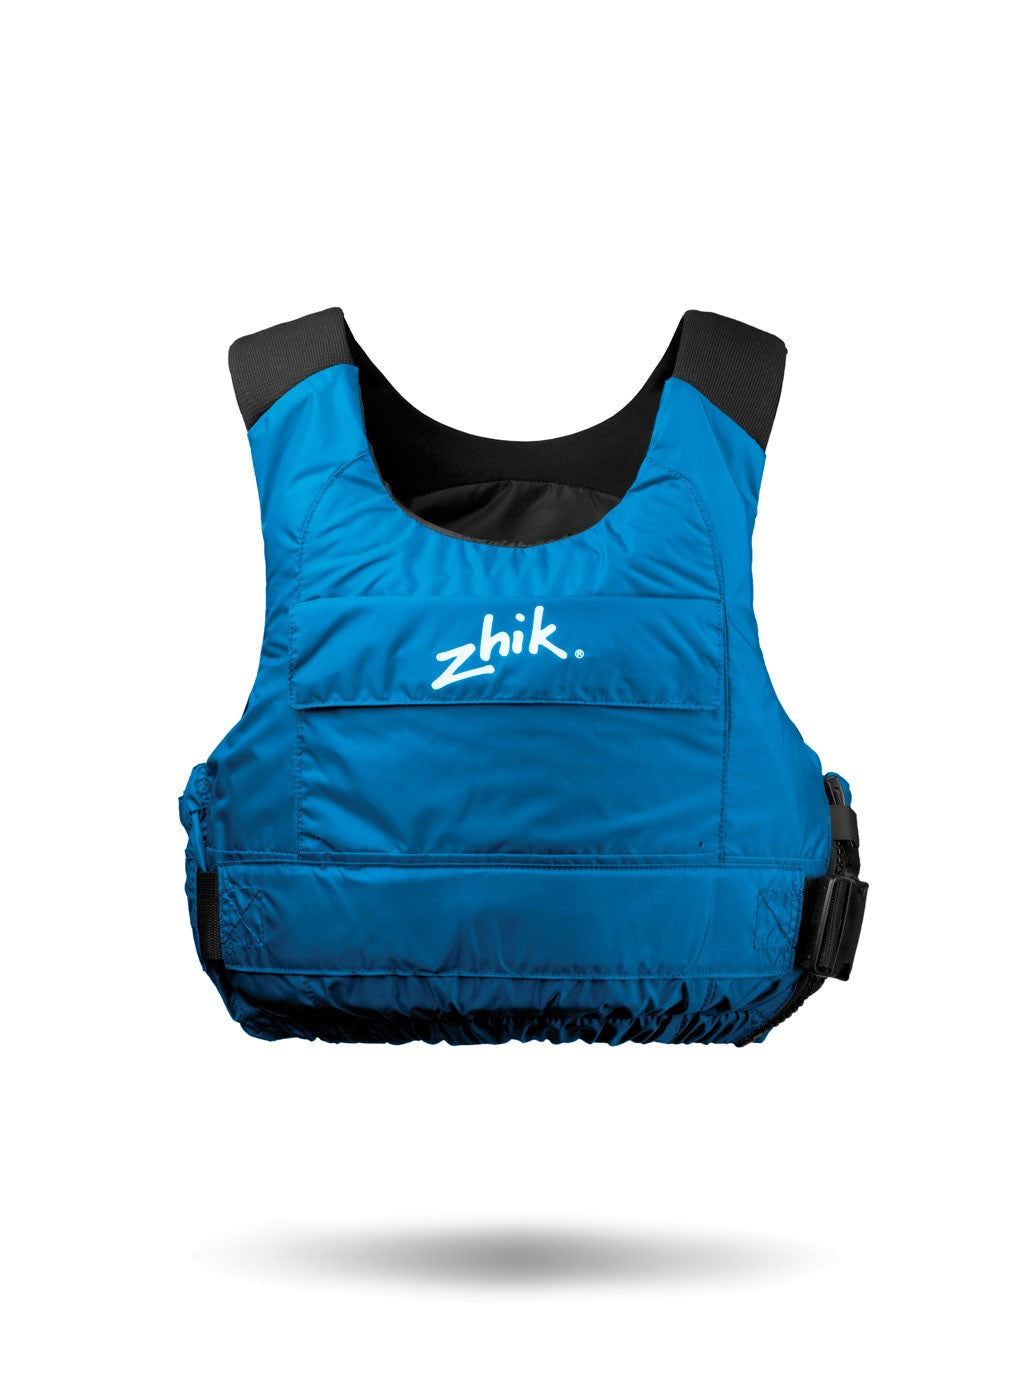 Life jacket, PFD - Zhik P3 Blue – Sail One